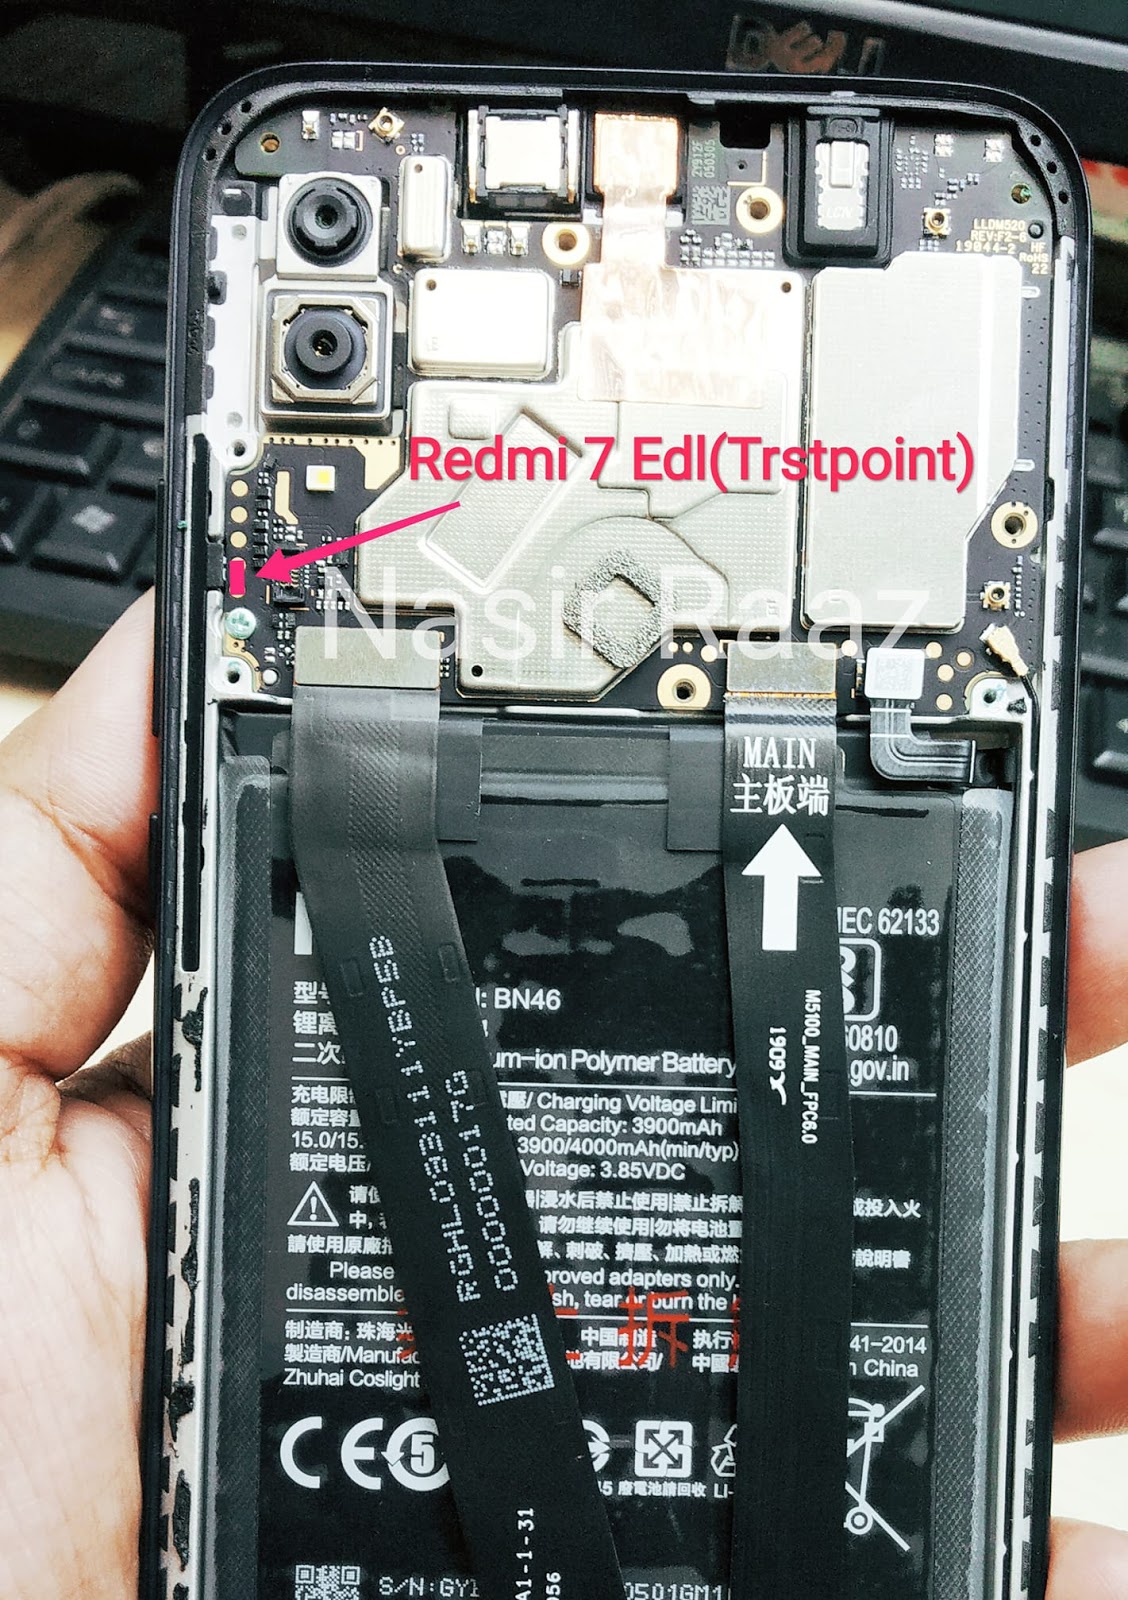 Xiaomi Redmi 7a Test Point